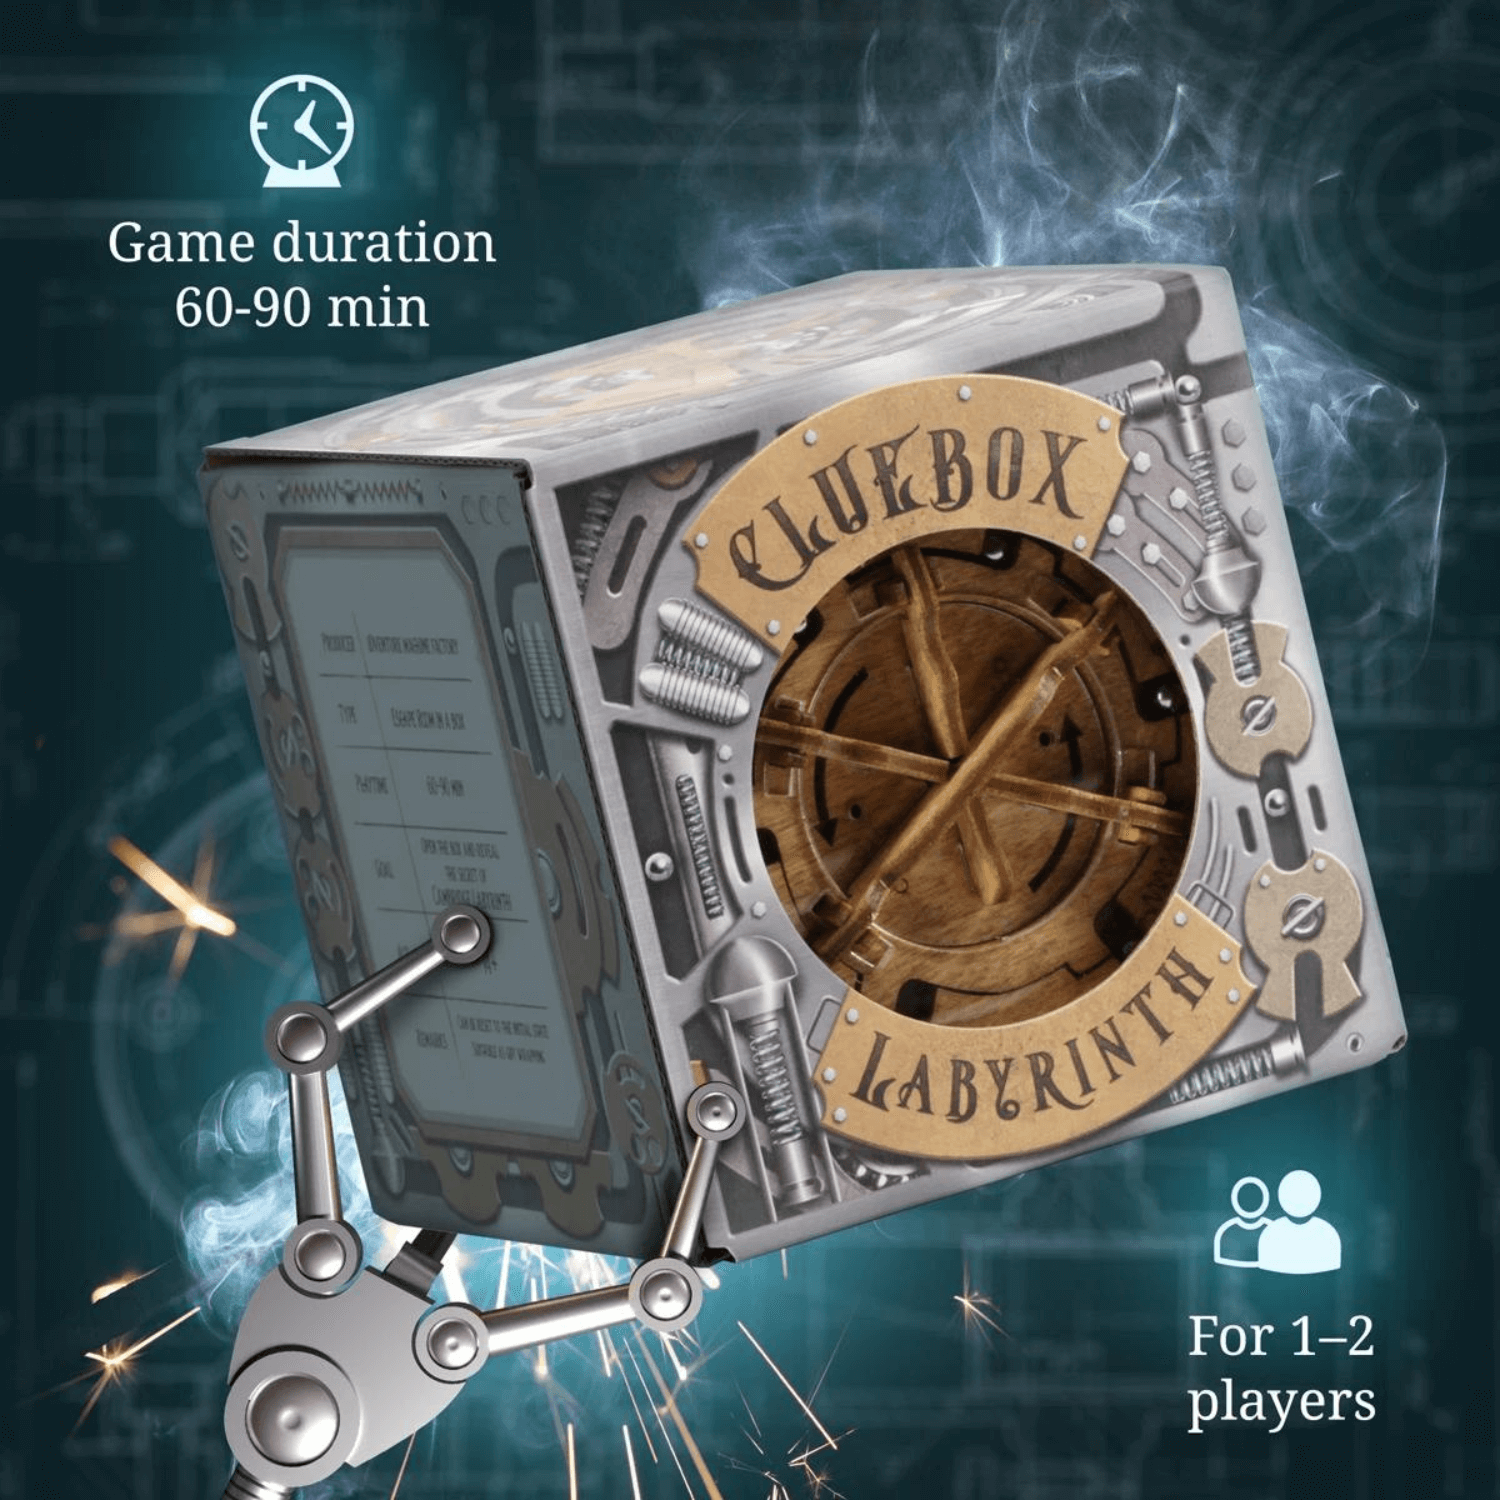 Cambridge Labyrinth: Cluebox 🎲 Play now